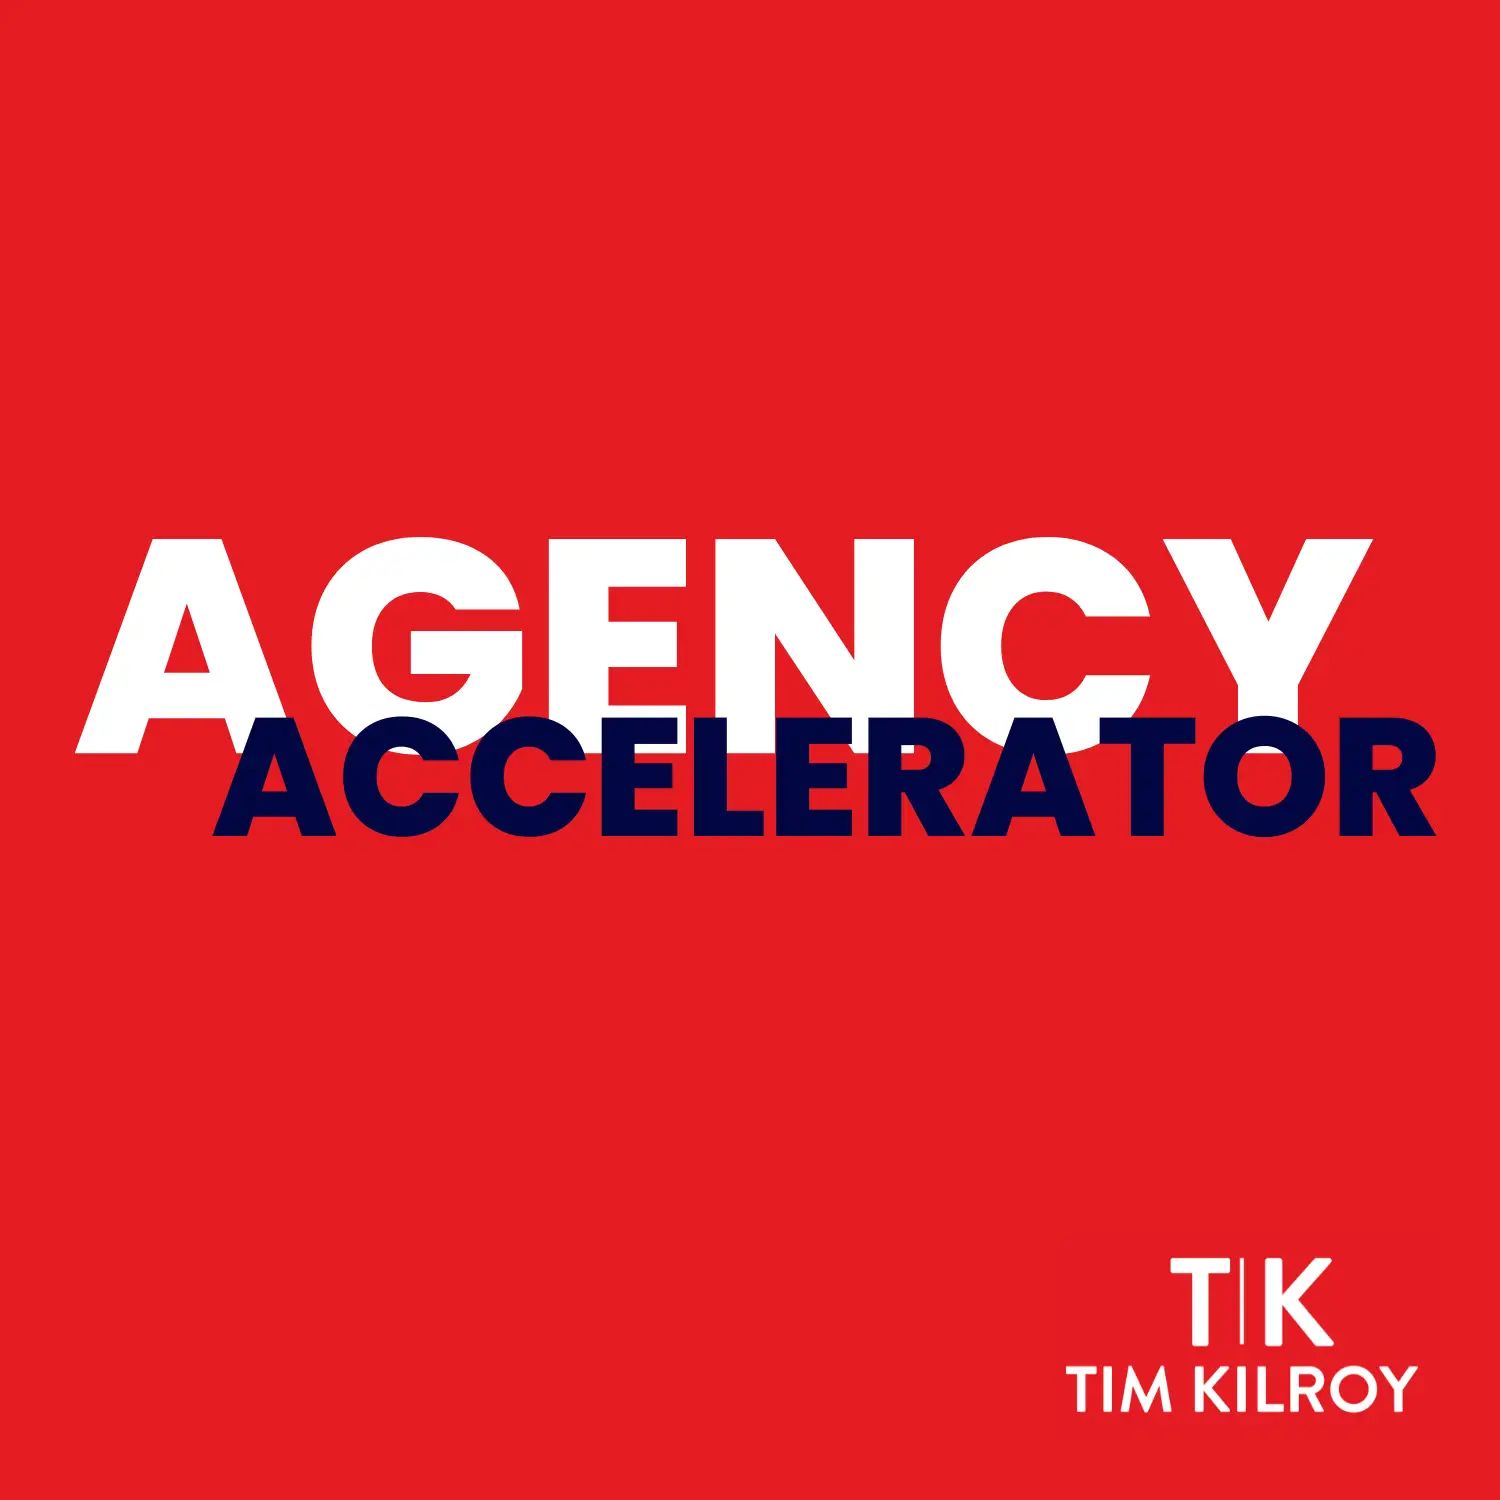 Agency Accelerator